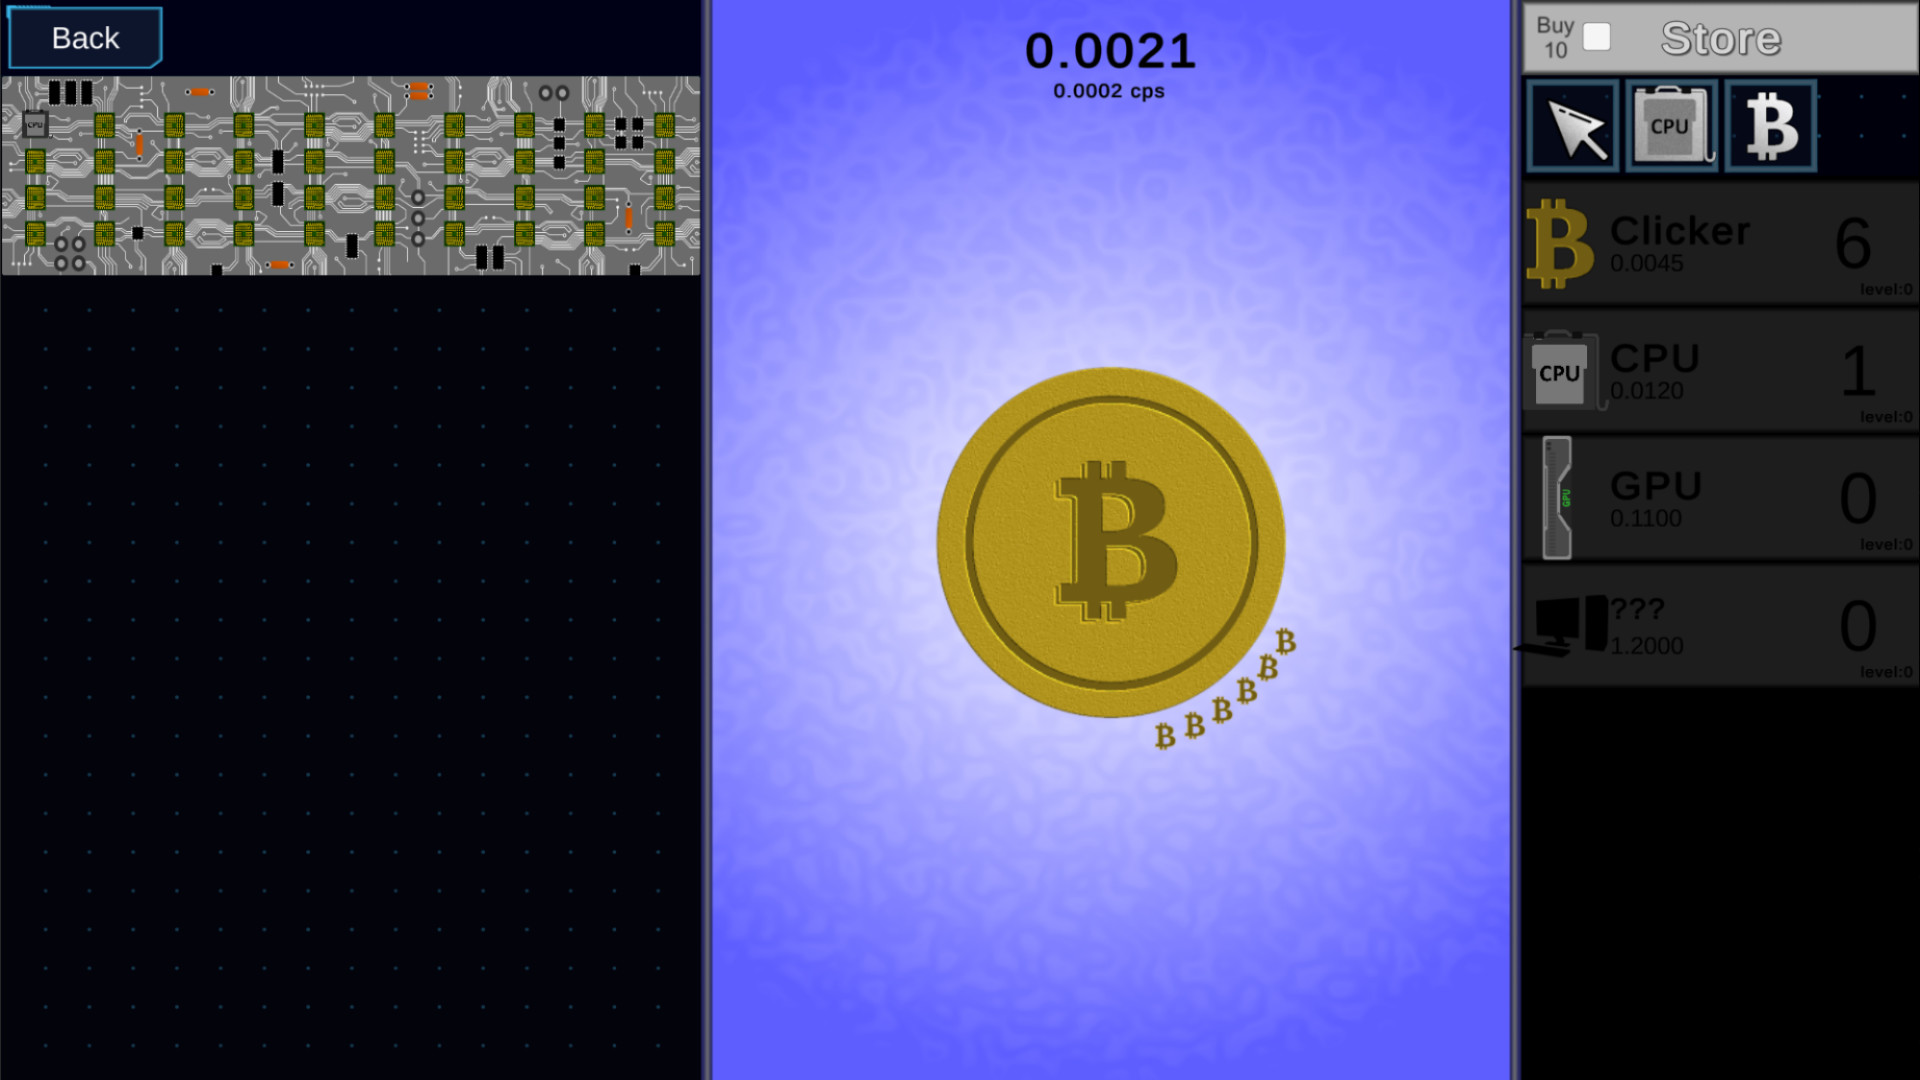 Jogo Bitcoin Clicker no Jogos 360